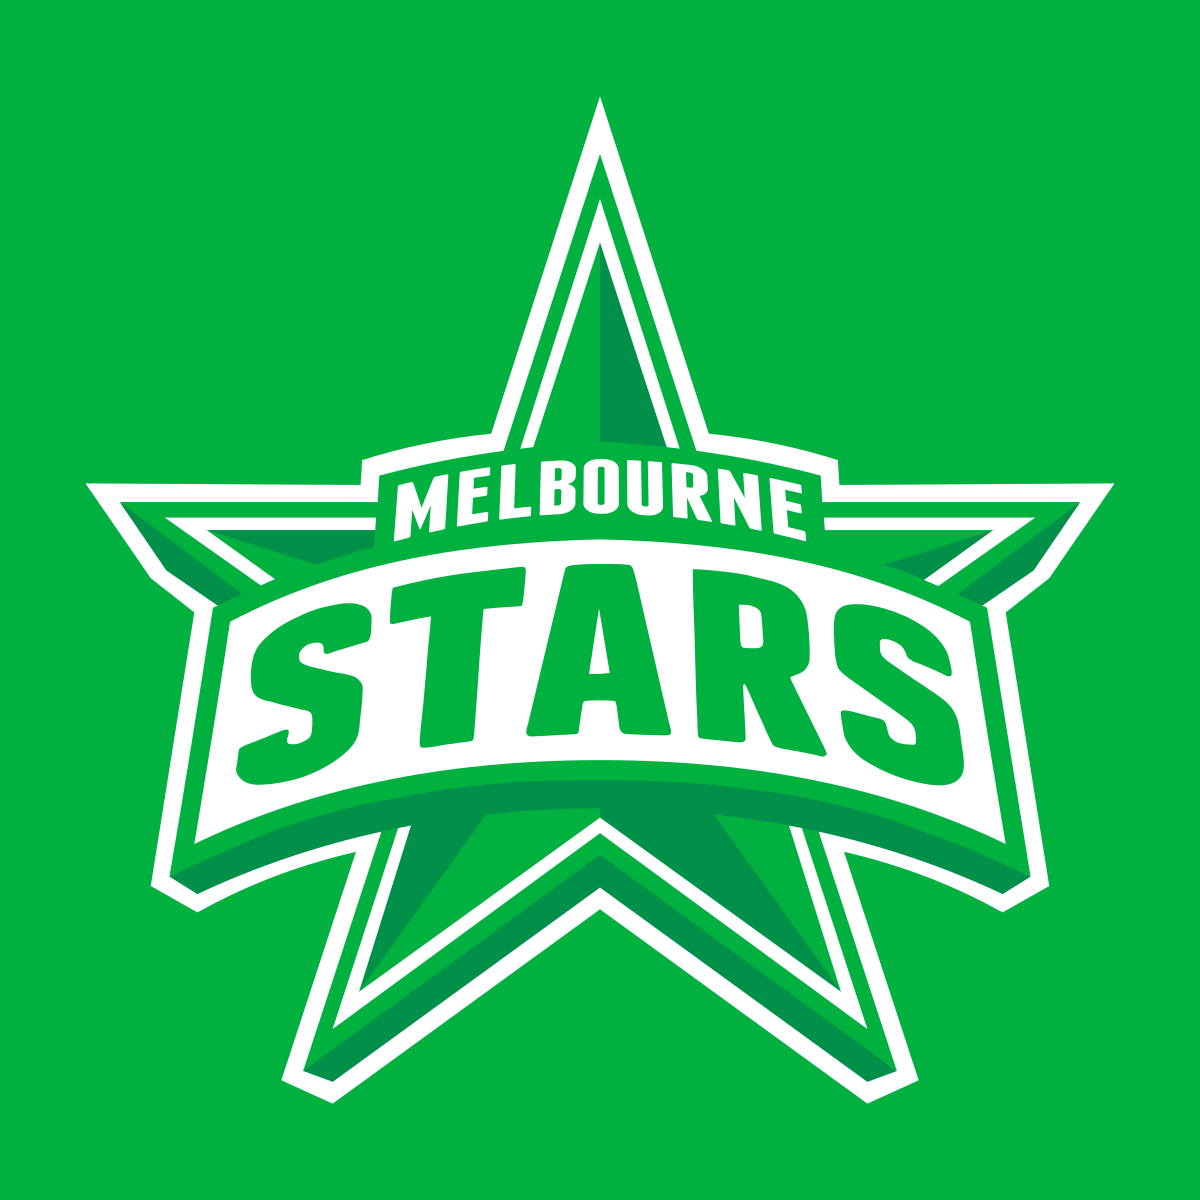 Melbourne Stars Big Bash League 2023-24 Squad, Players, Schedule, Fixtures, Match Time Table, Venue, Wikipedia, Cricbuzz, Espn cricinfo.